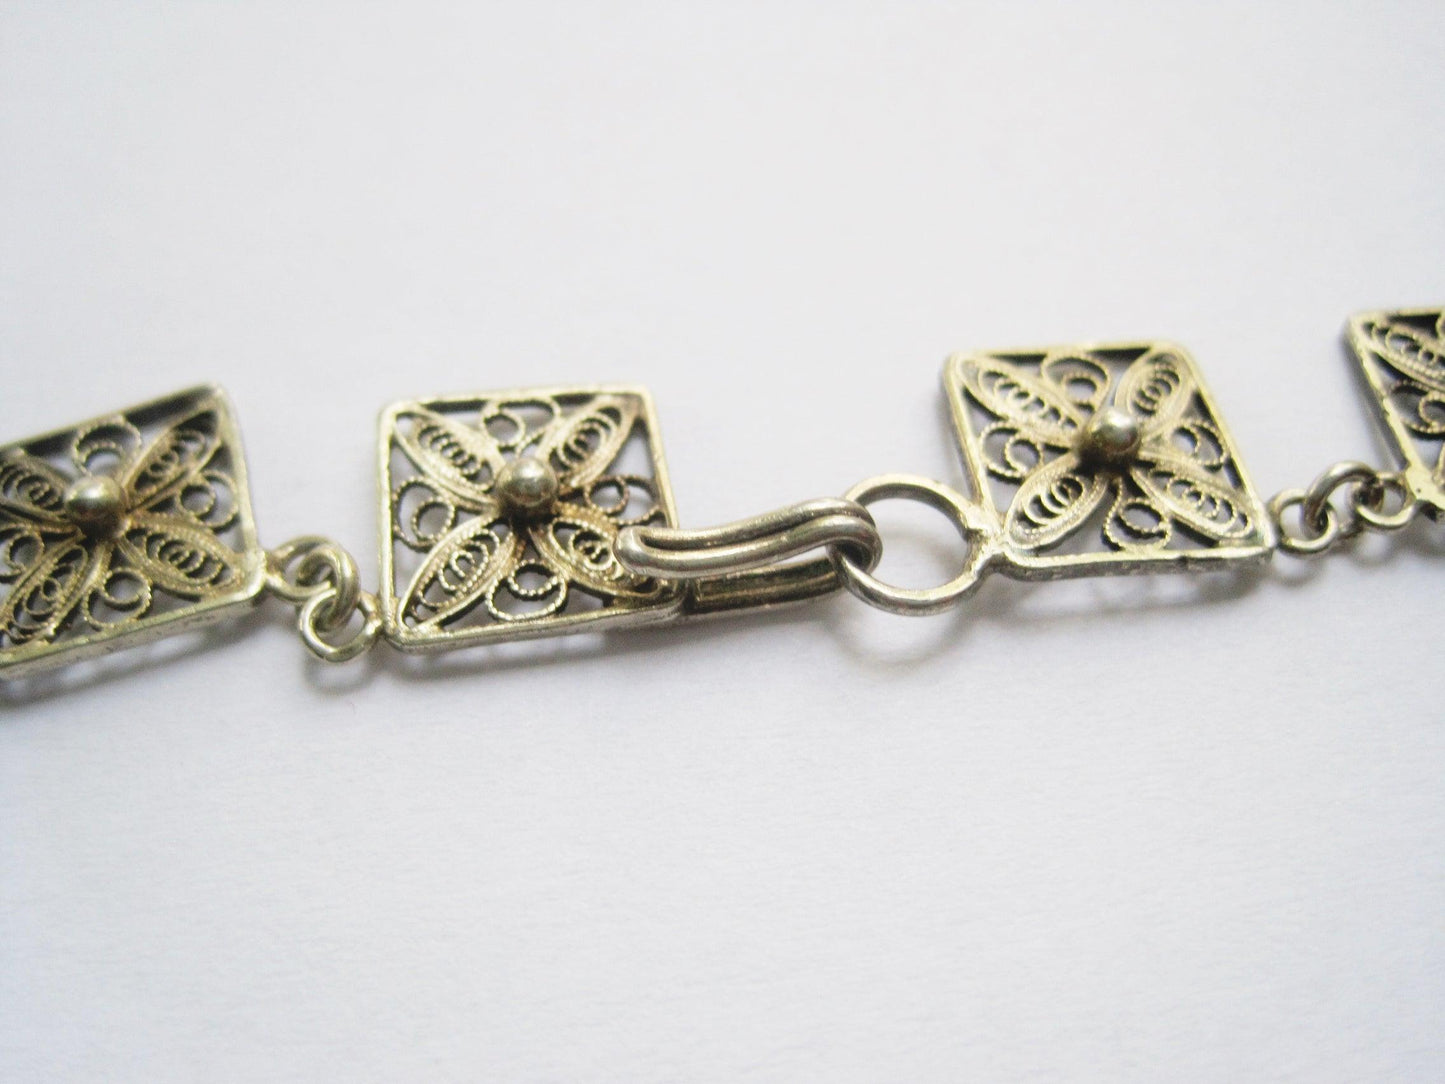 Vintage Delicate European Silver Filigree Choker Necklace - Anteeka